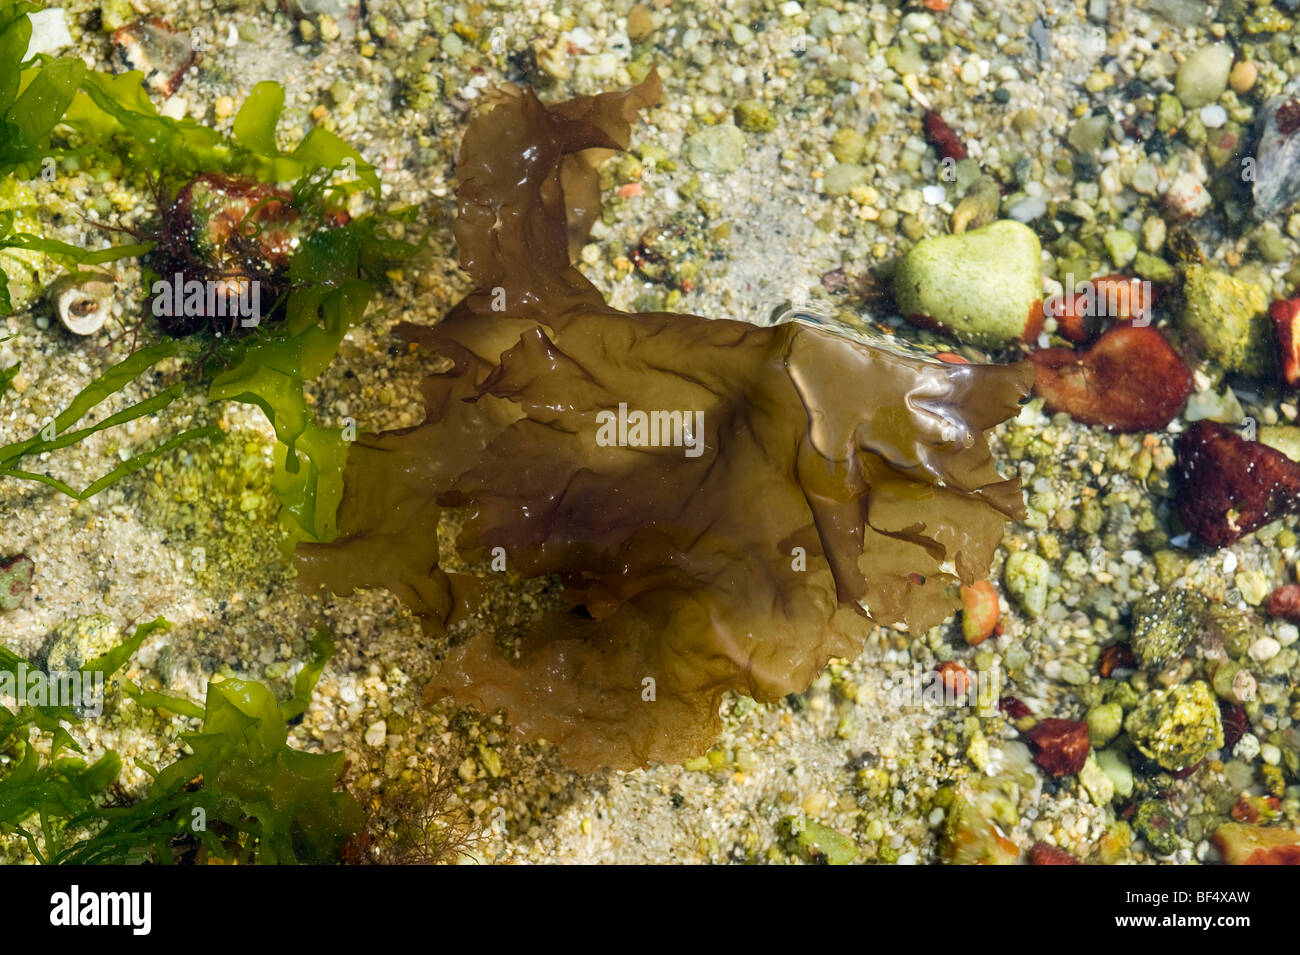 Nori seaweed, Laver (Porphyra tenera) Stock Photo